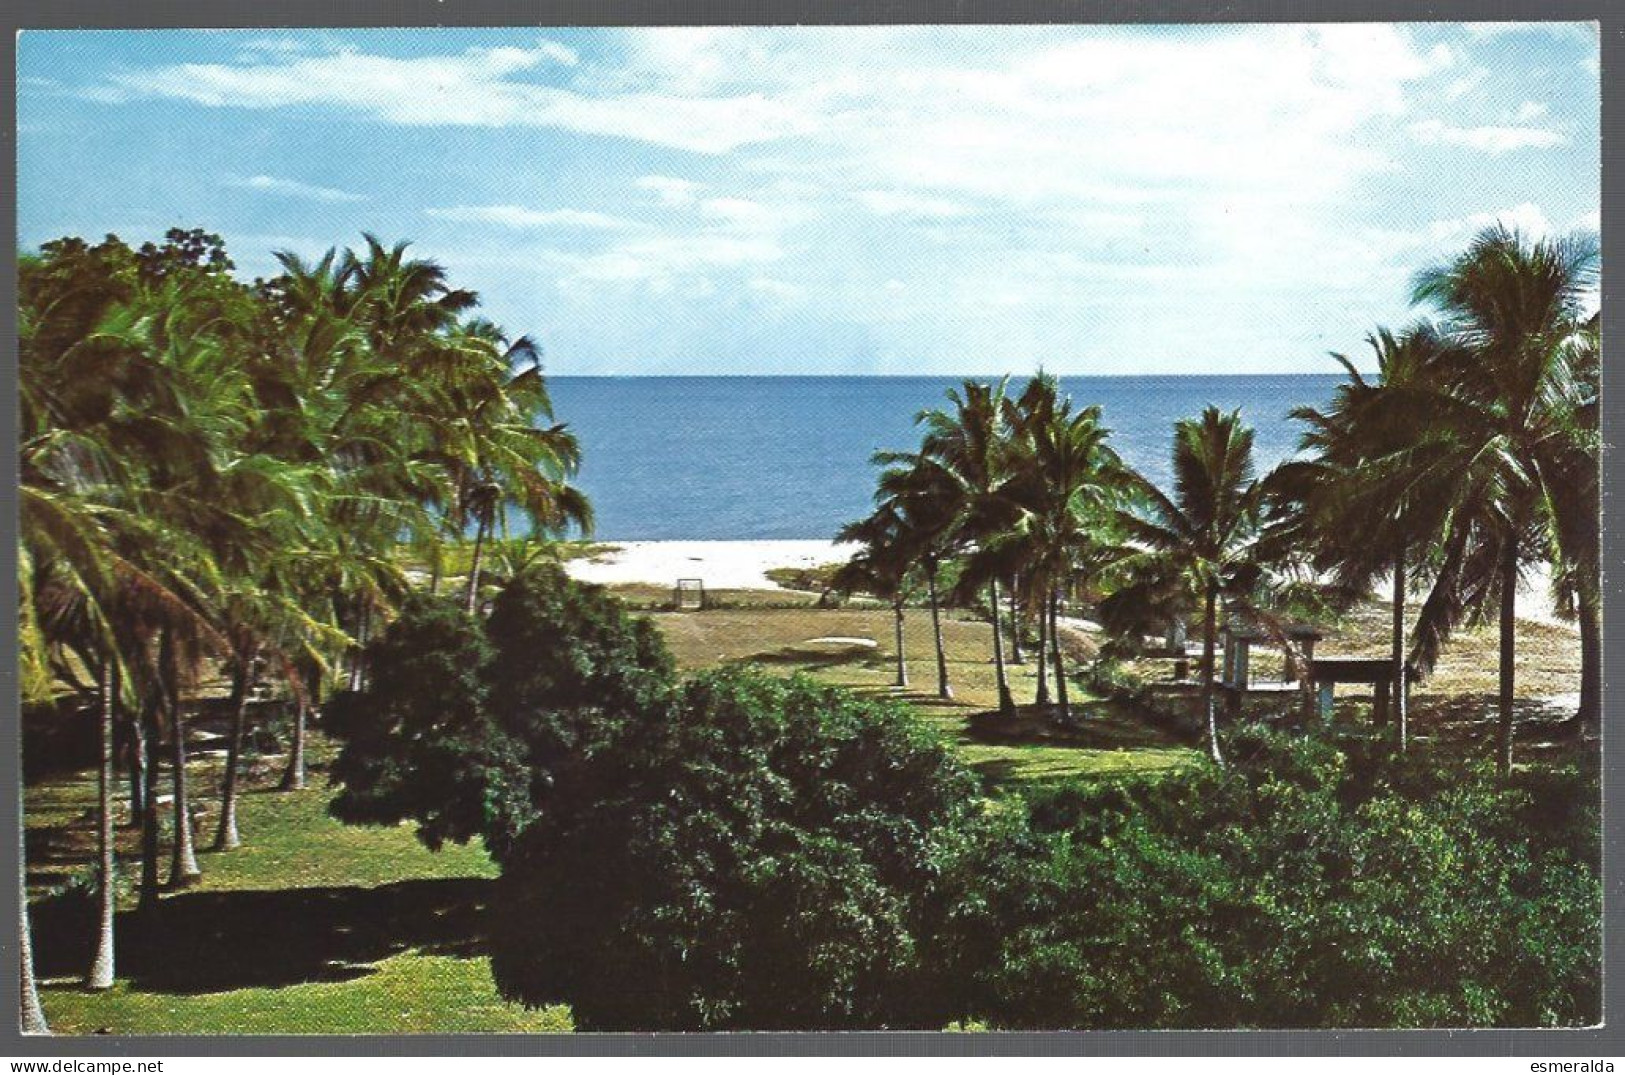 (PAN) CP FF-671-,Santa Clara Beach,one Of The Most Popular Beaches In The Interior Of The Republic Of Panama.unused - Panama